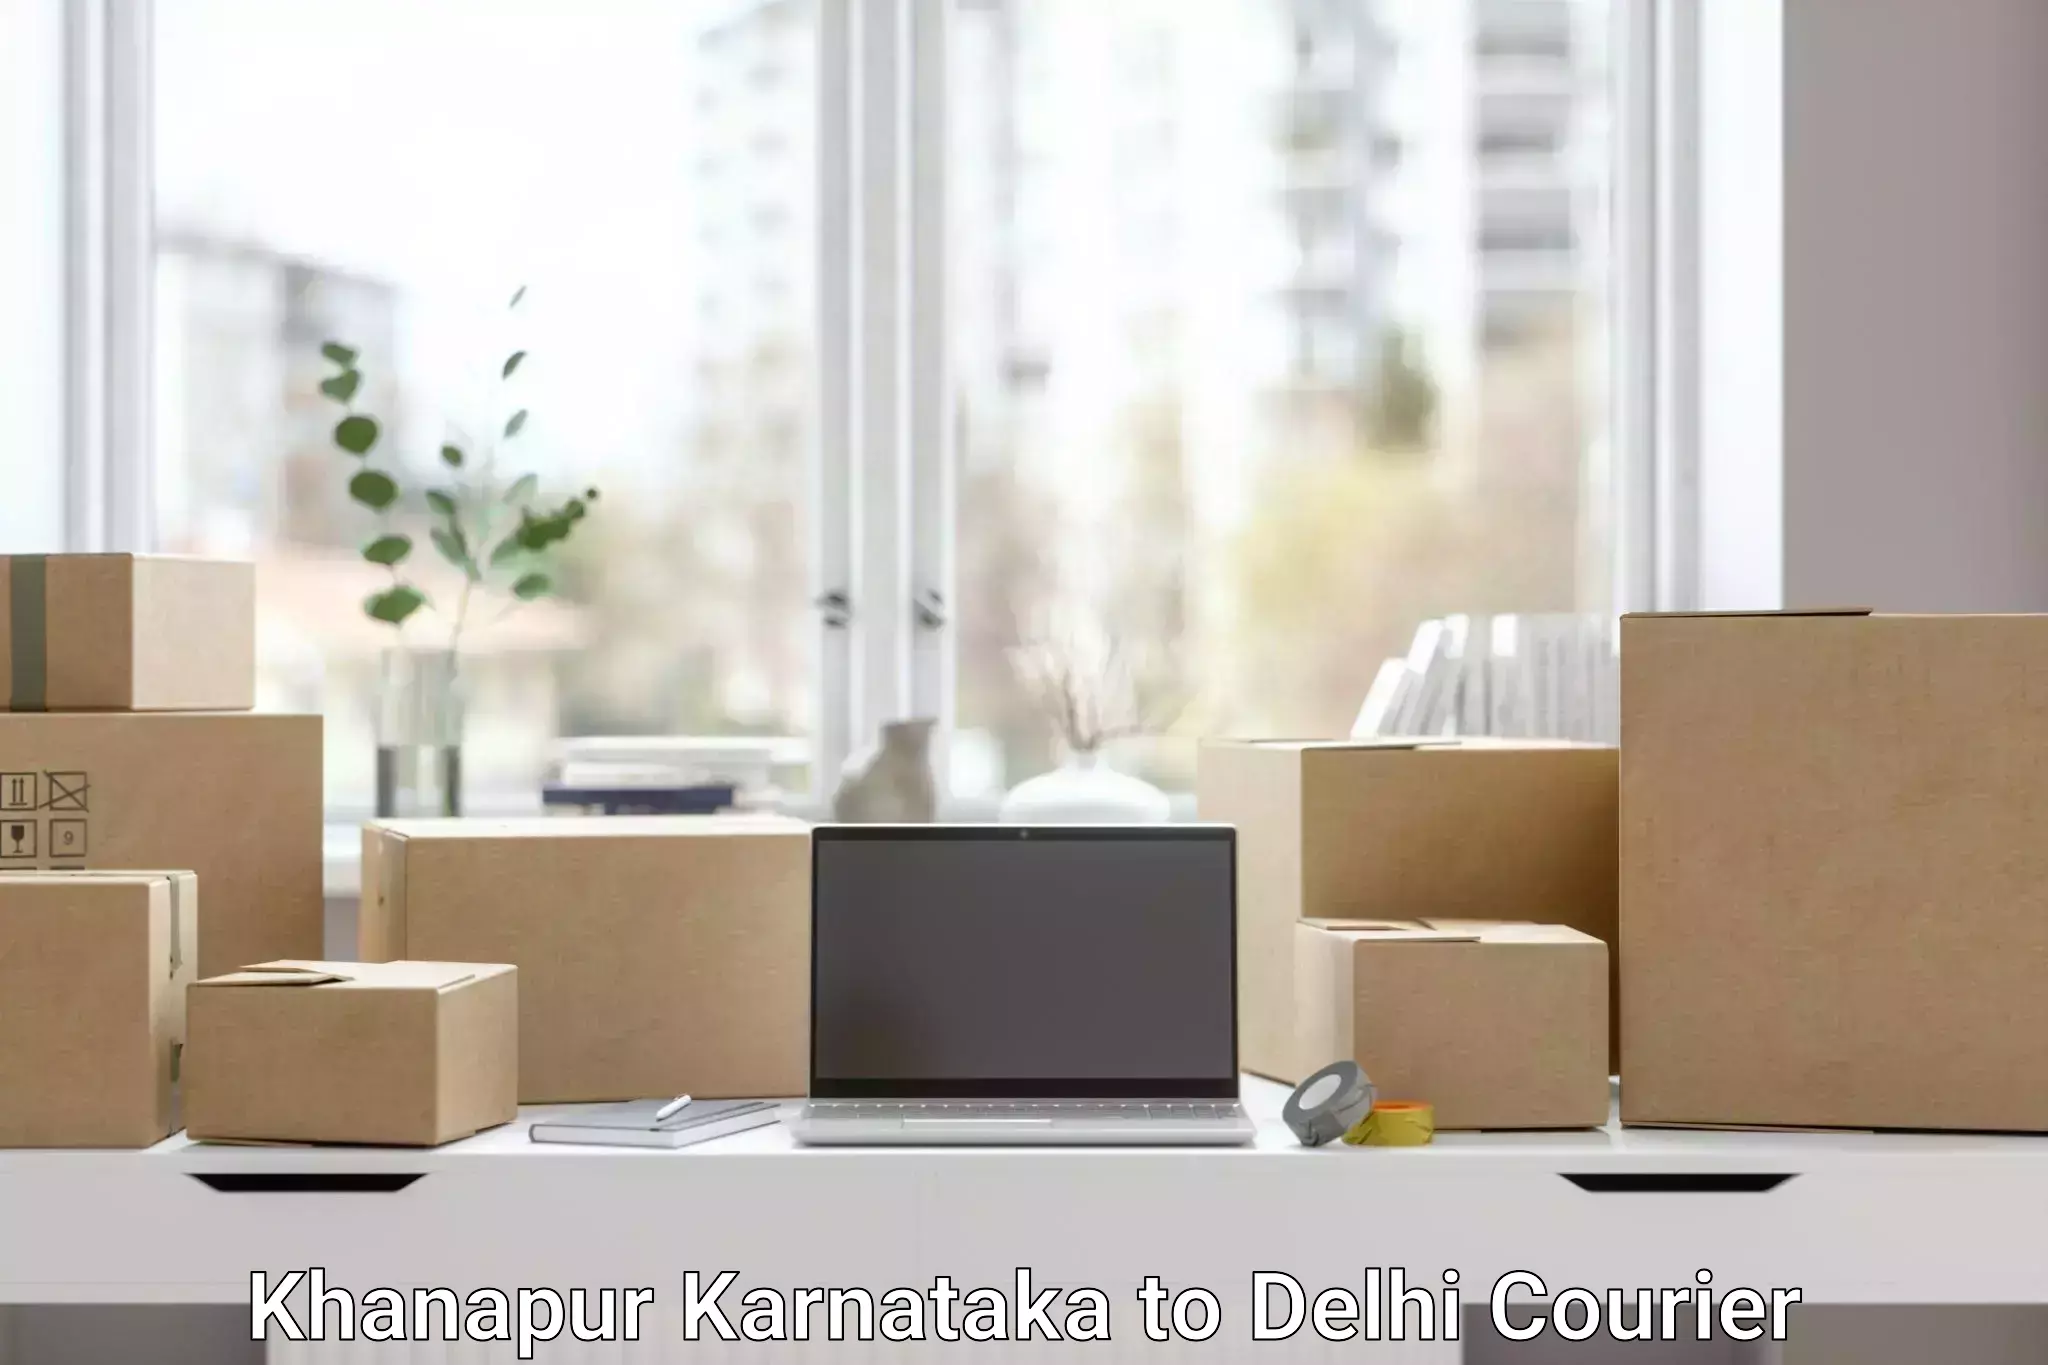 Online package tracking Khanapur Karnataka to Kalkaji